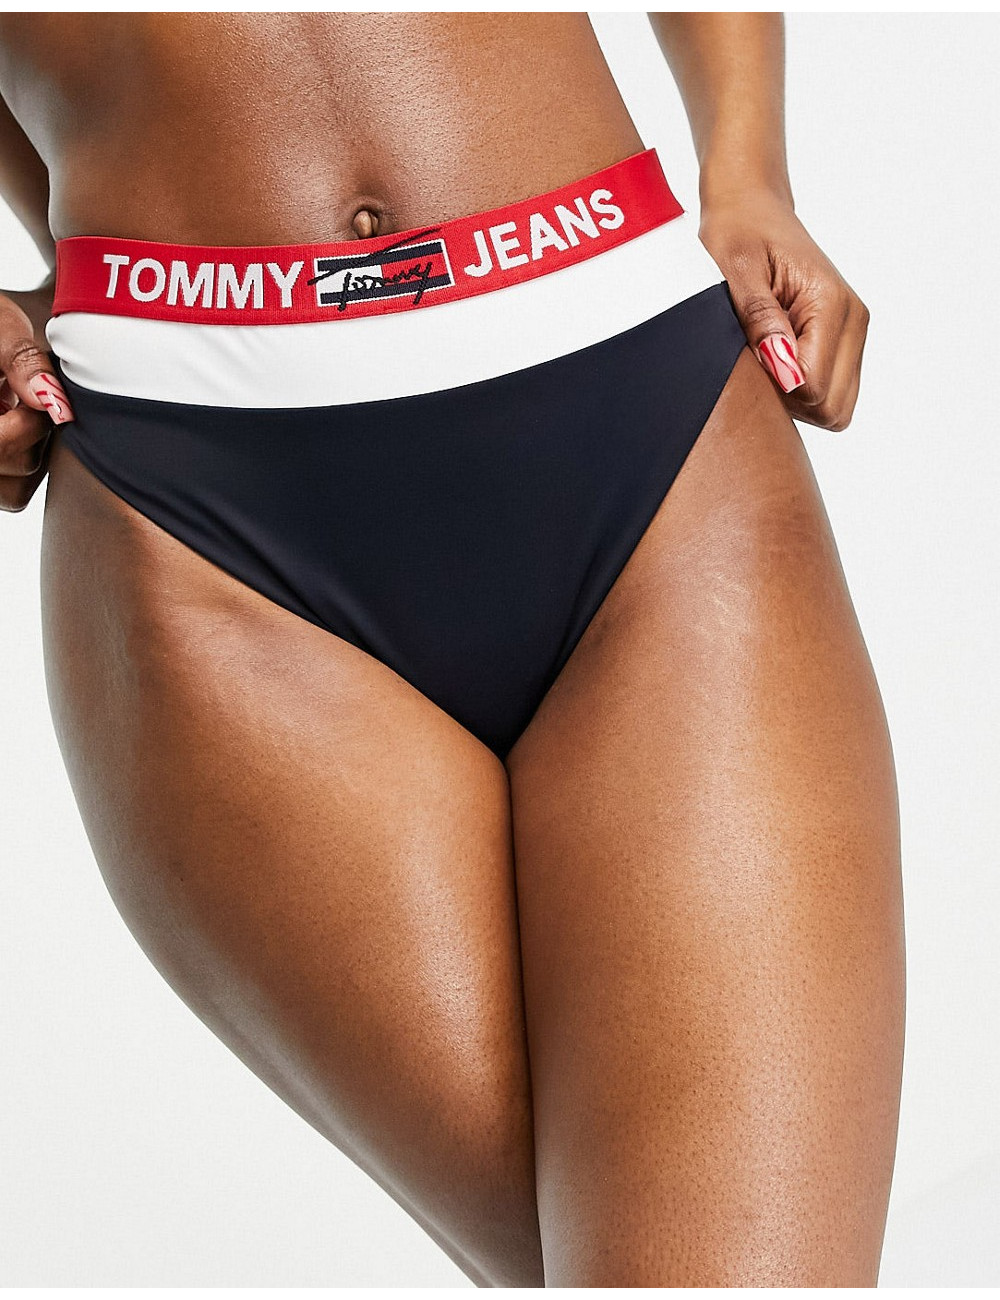 Tommy Hilfiger Jeans logo...